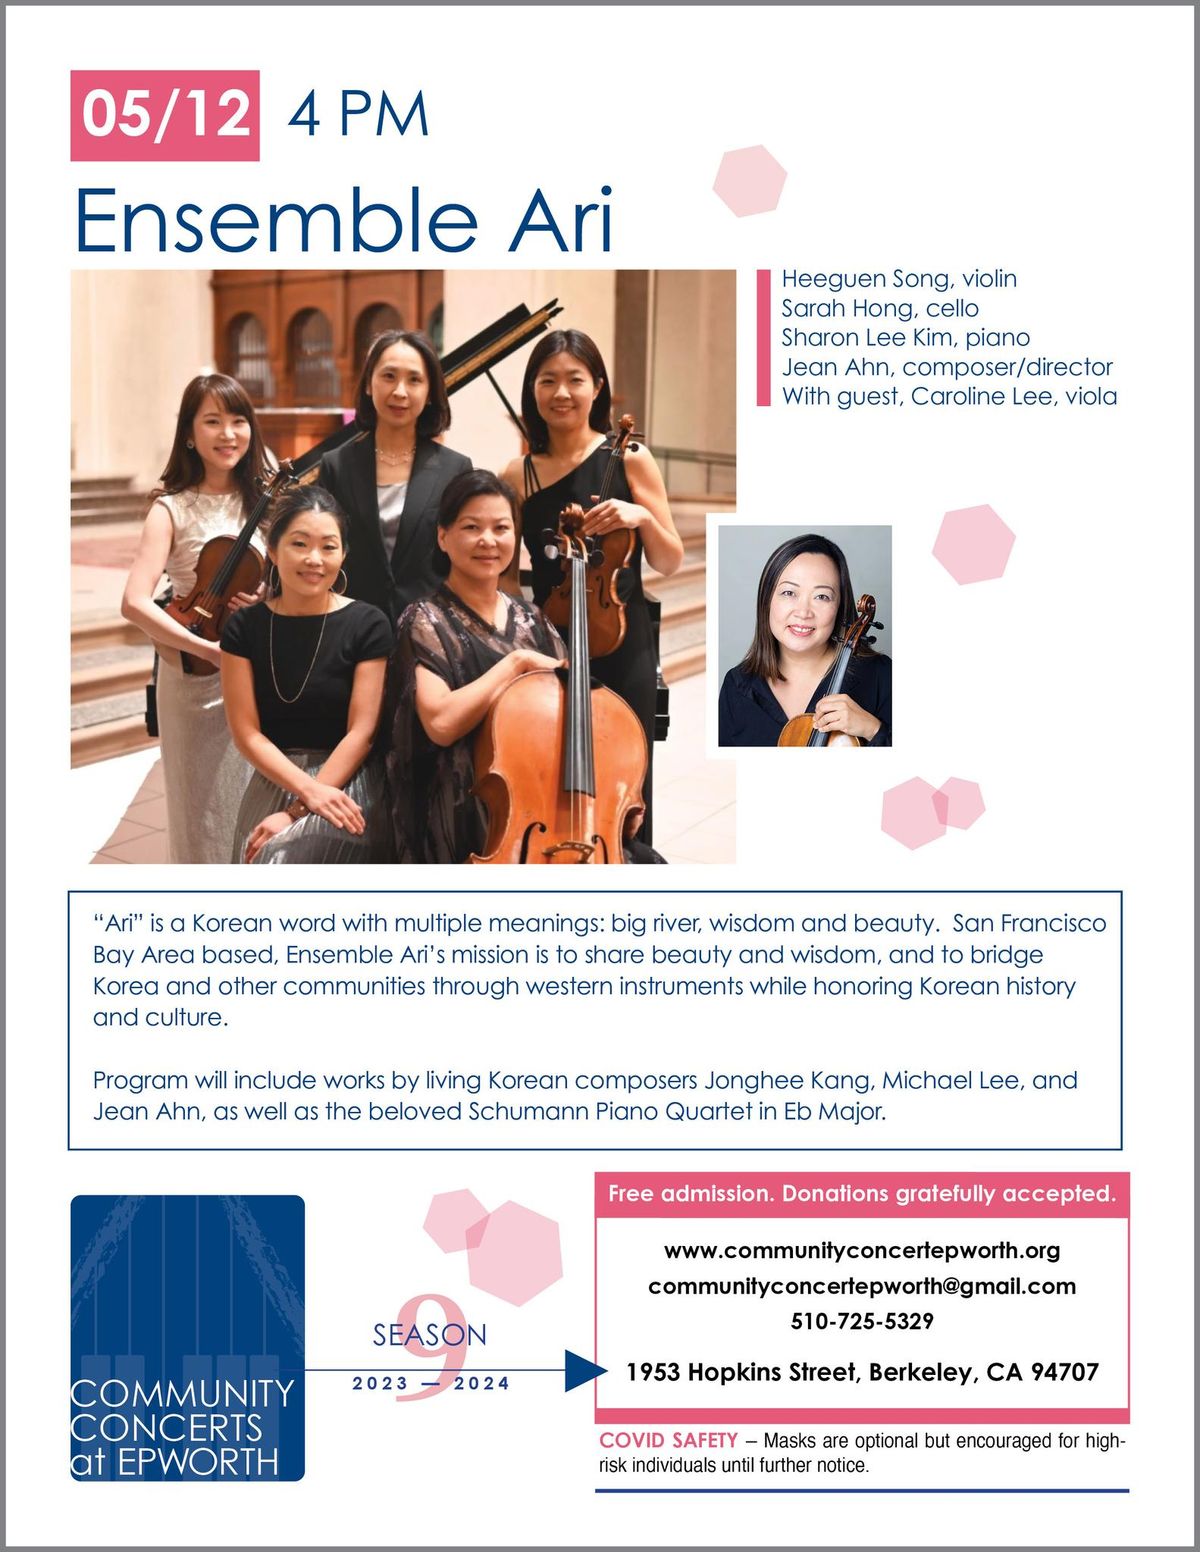 CCE presents Ensemble Ari